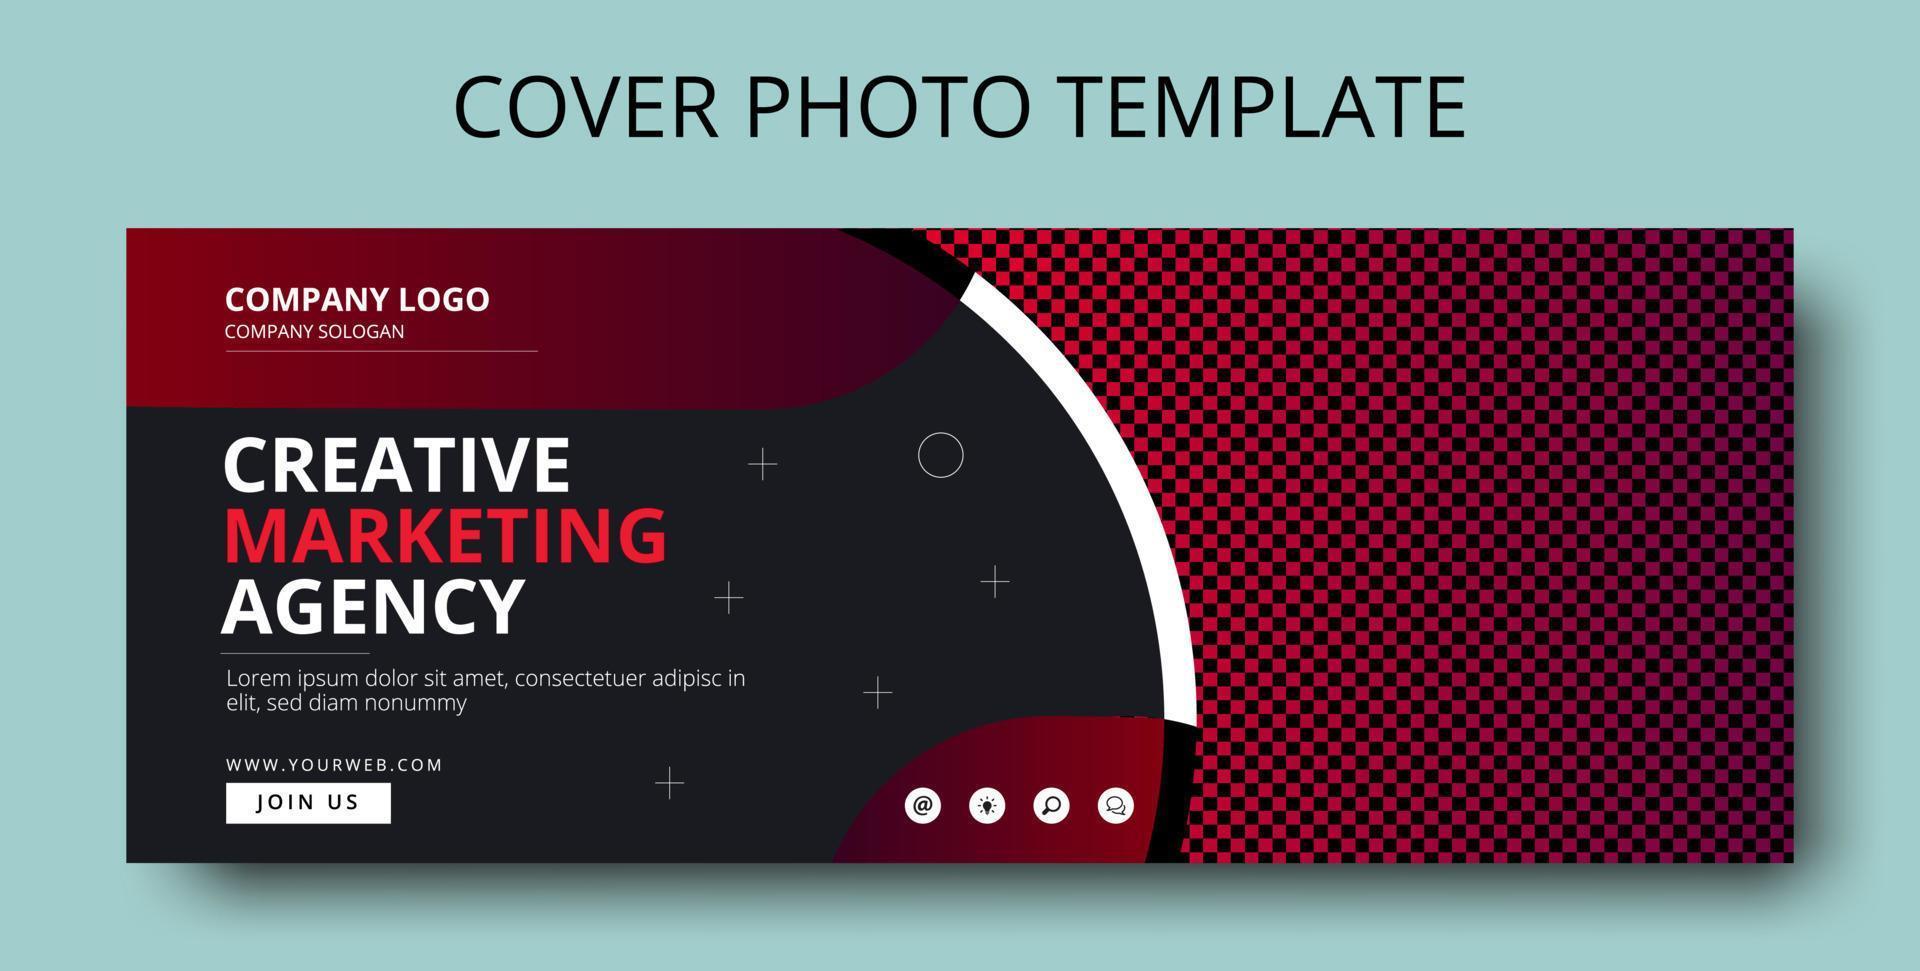 Social media cover photo template, Cover photo design for social media vector